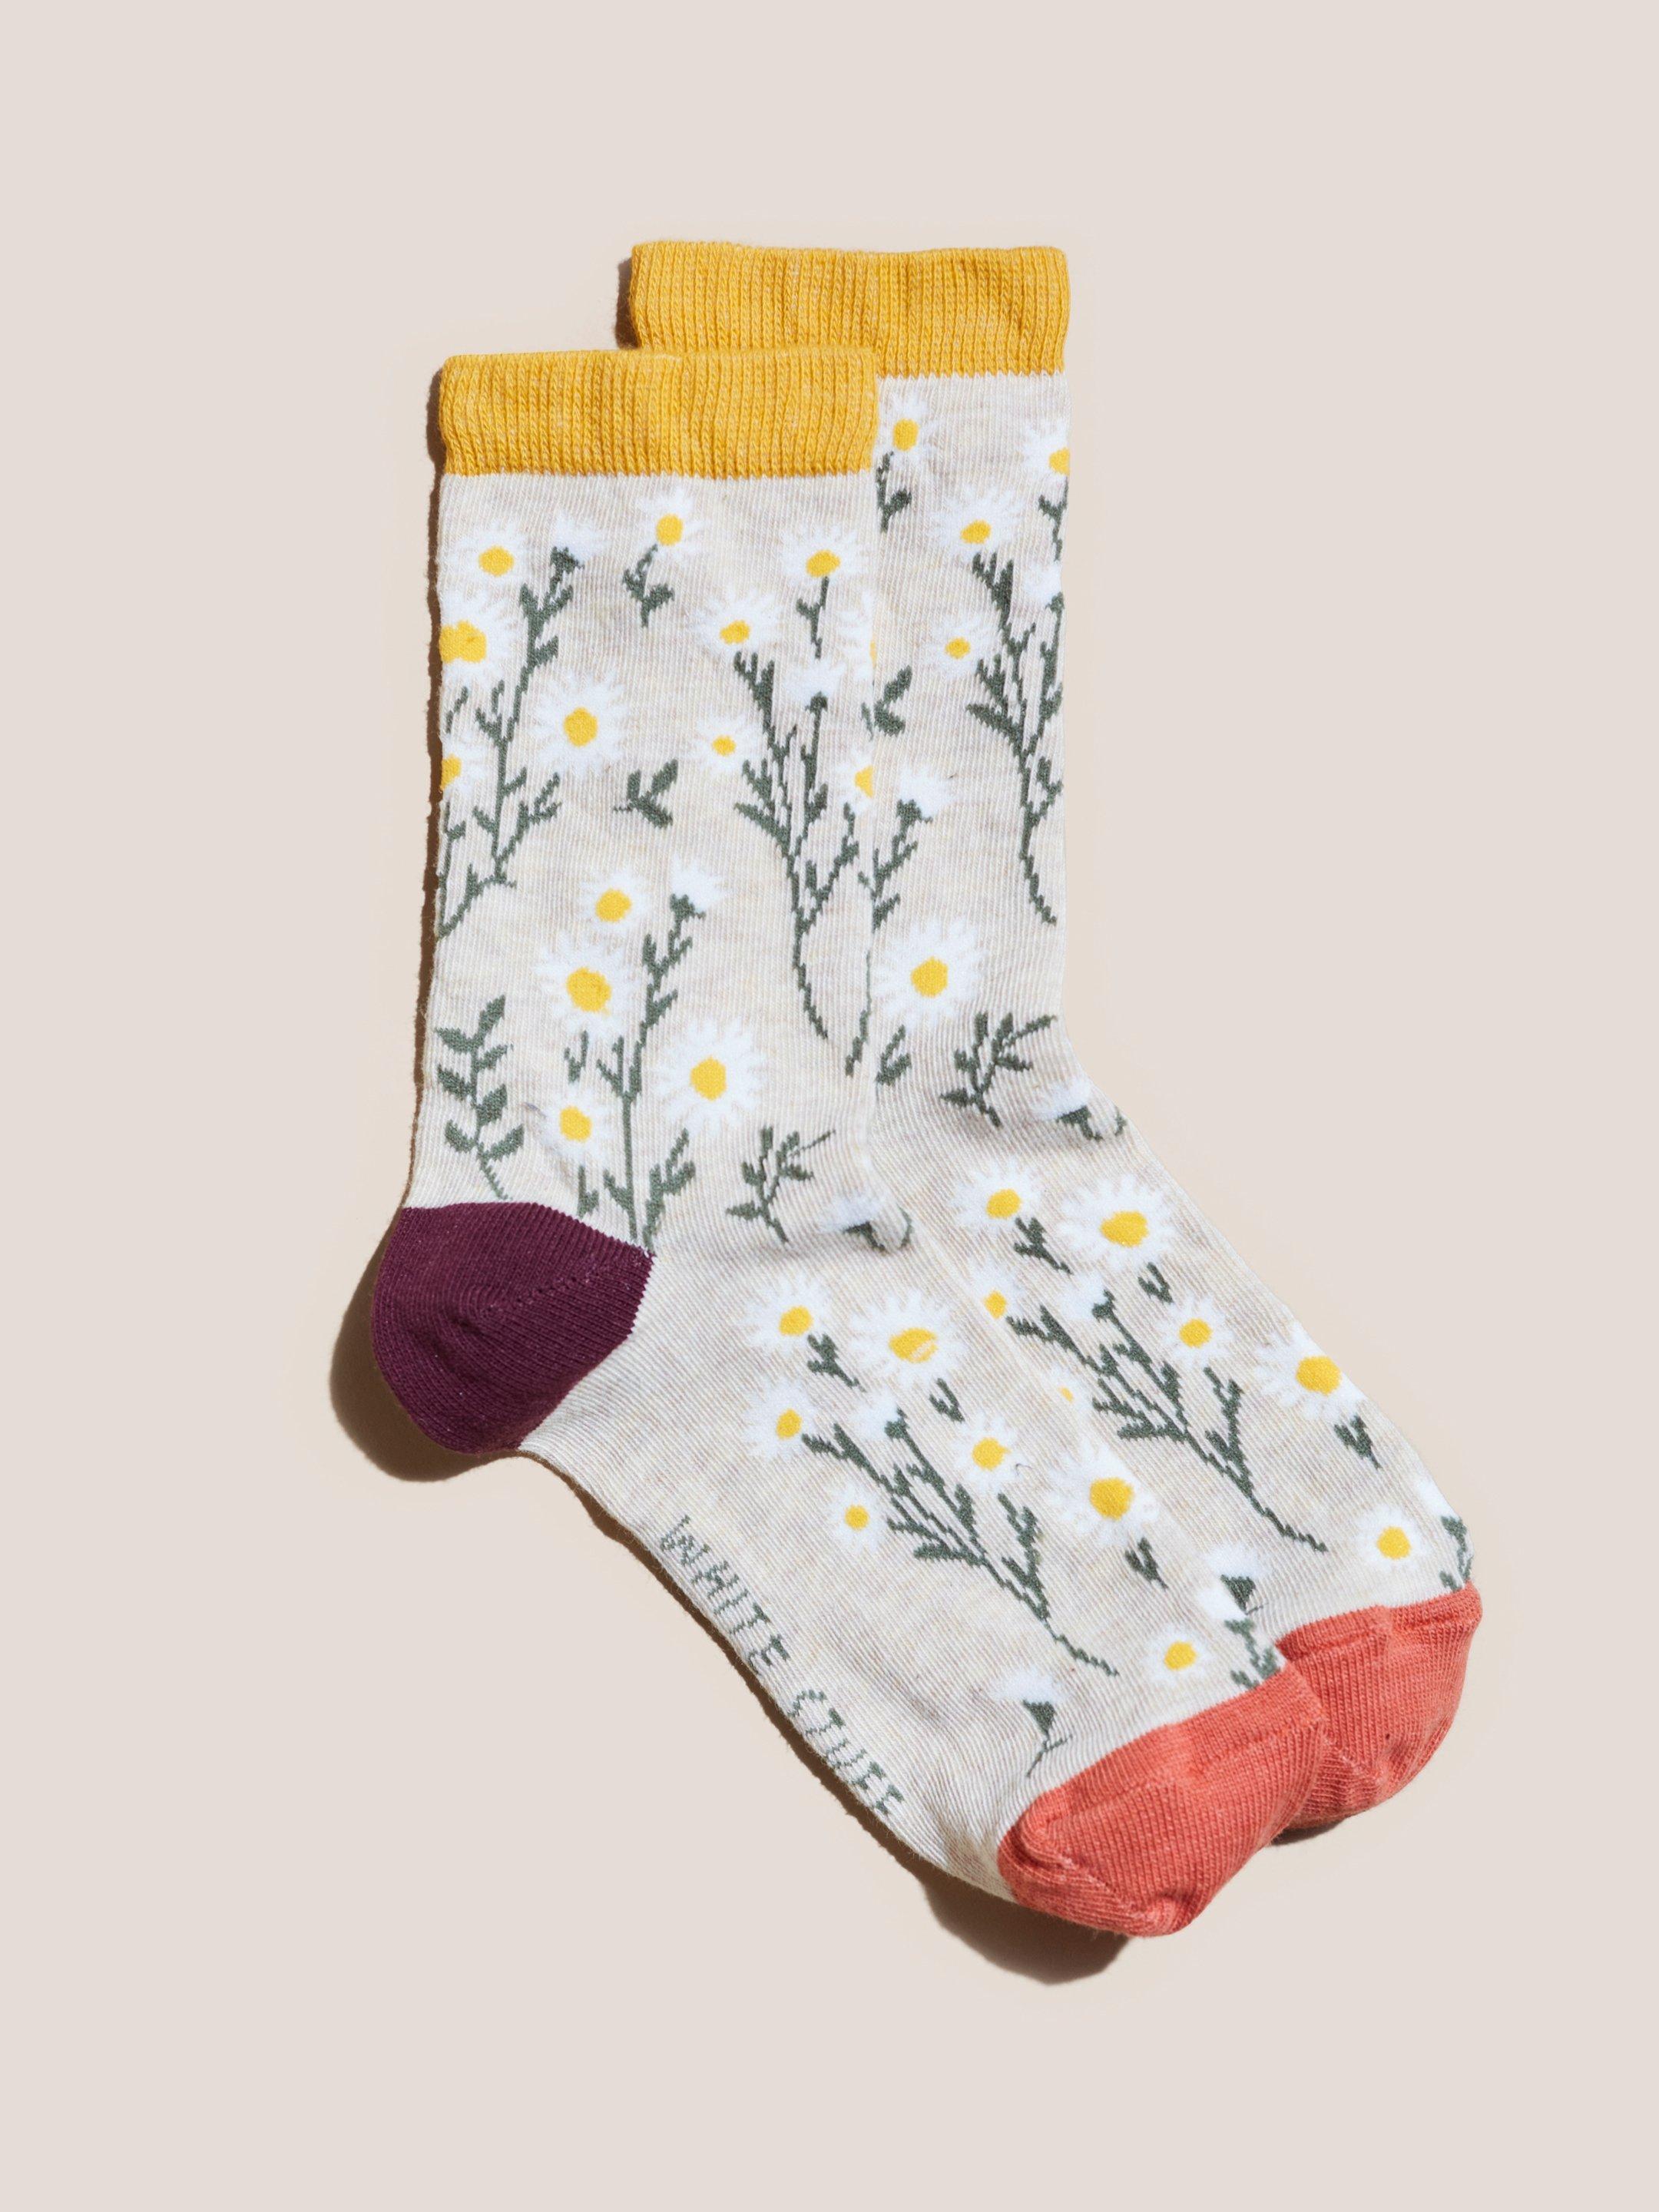 Spring Flower Socks in NAT MLT - FLAT FRONT